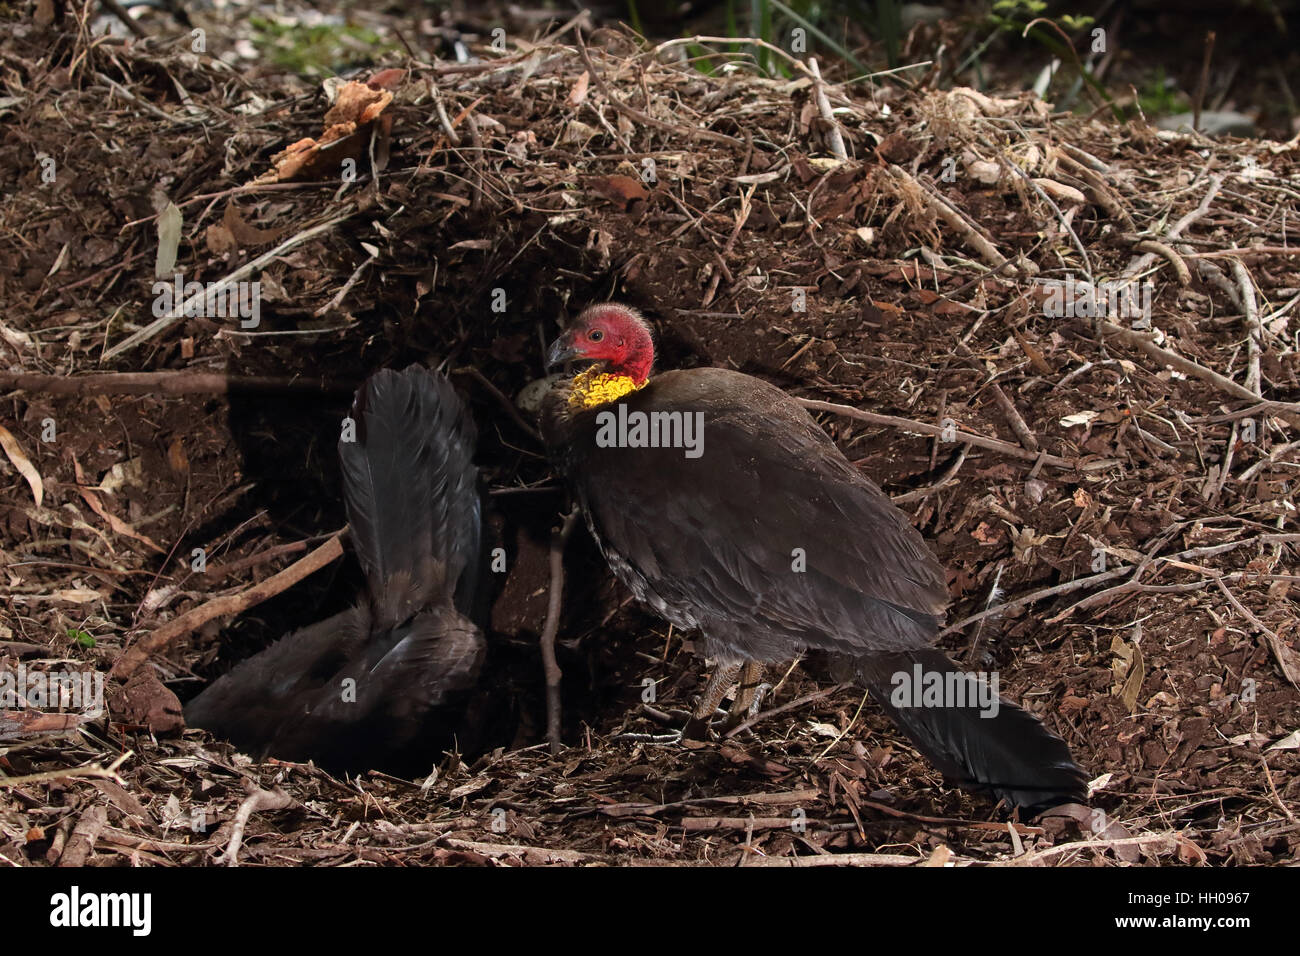 Cepillo australiano o bush Turquía hembra nido cavando hoyos con macho mirando Foto de stock